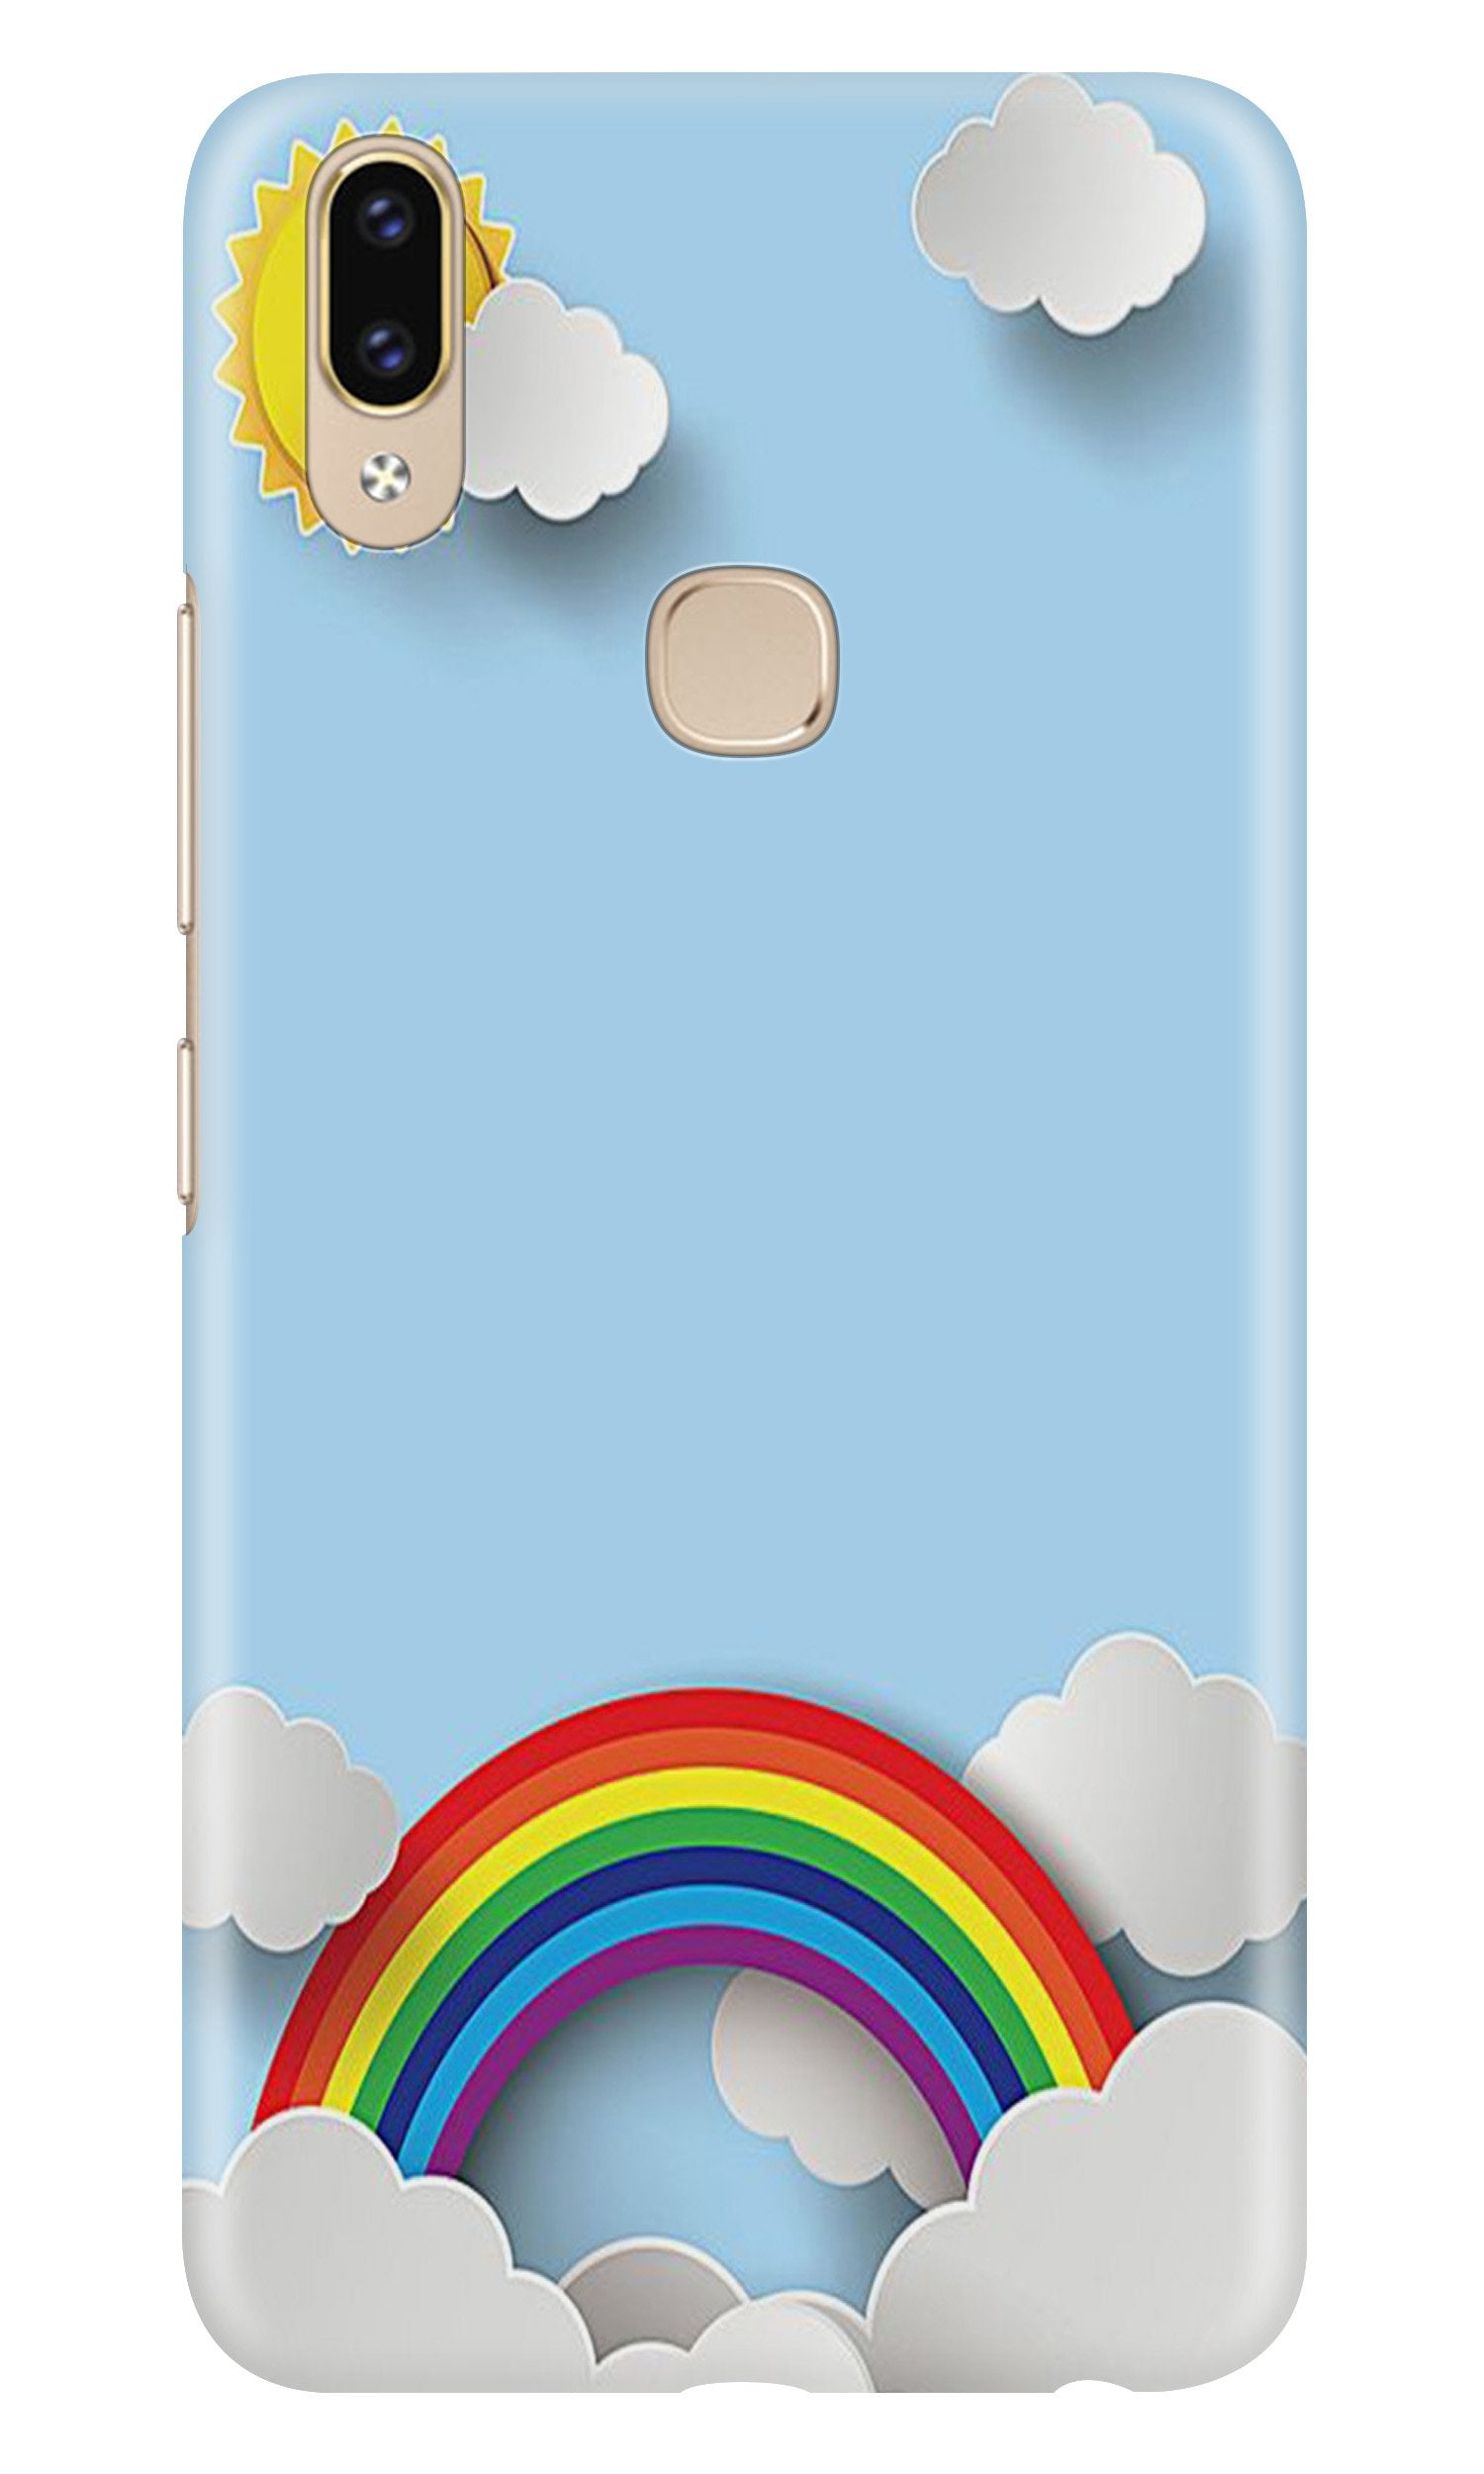 Rainbow Case for Asus Zenfone Max Pro M2 (Design No. 225)